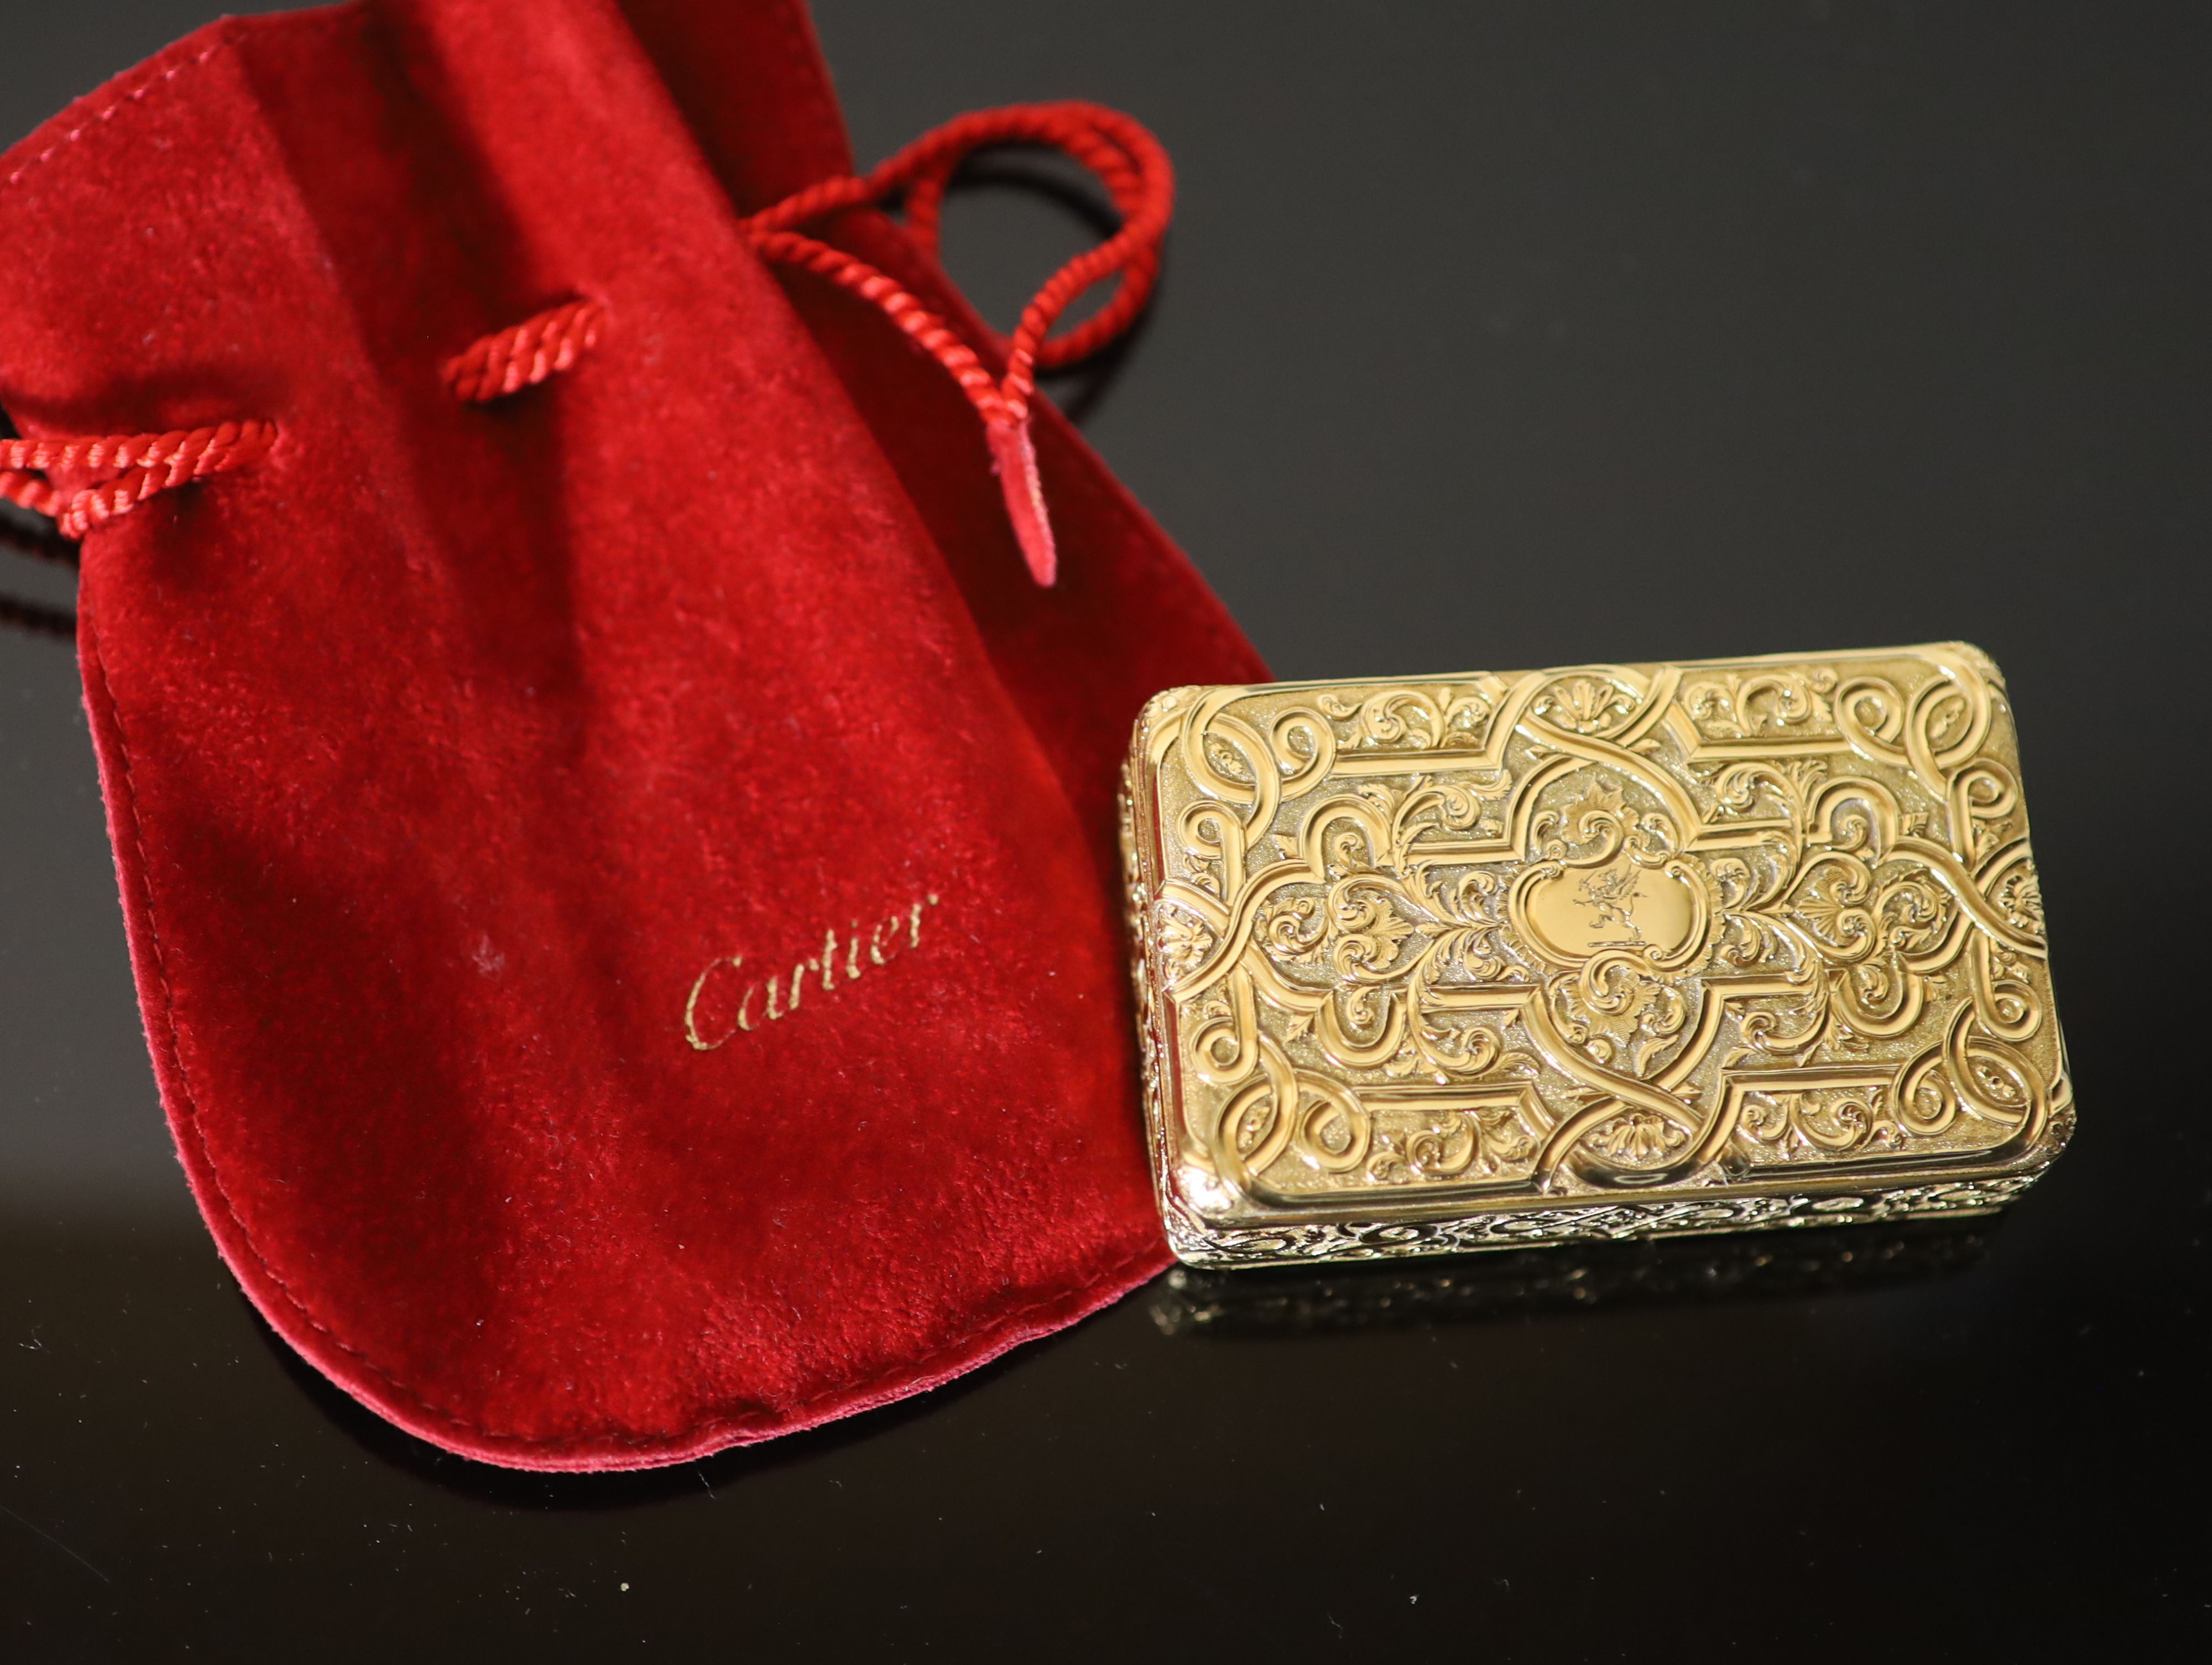 A good William IV 18ct gold rectangular snuff box by John Linnet, London, 1833,